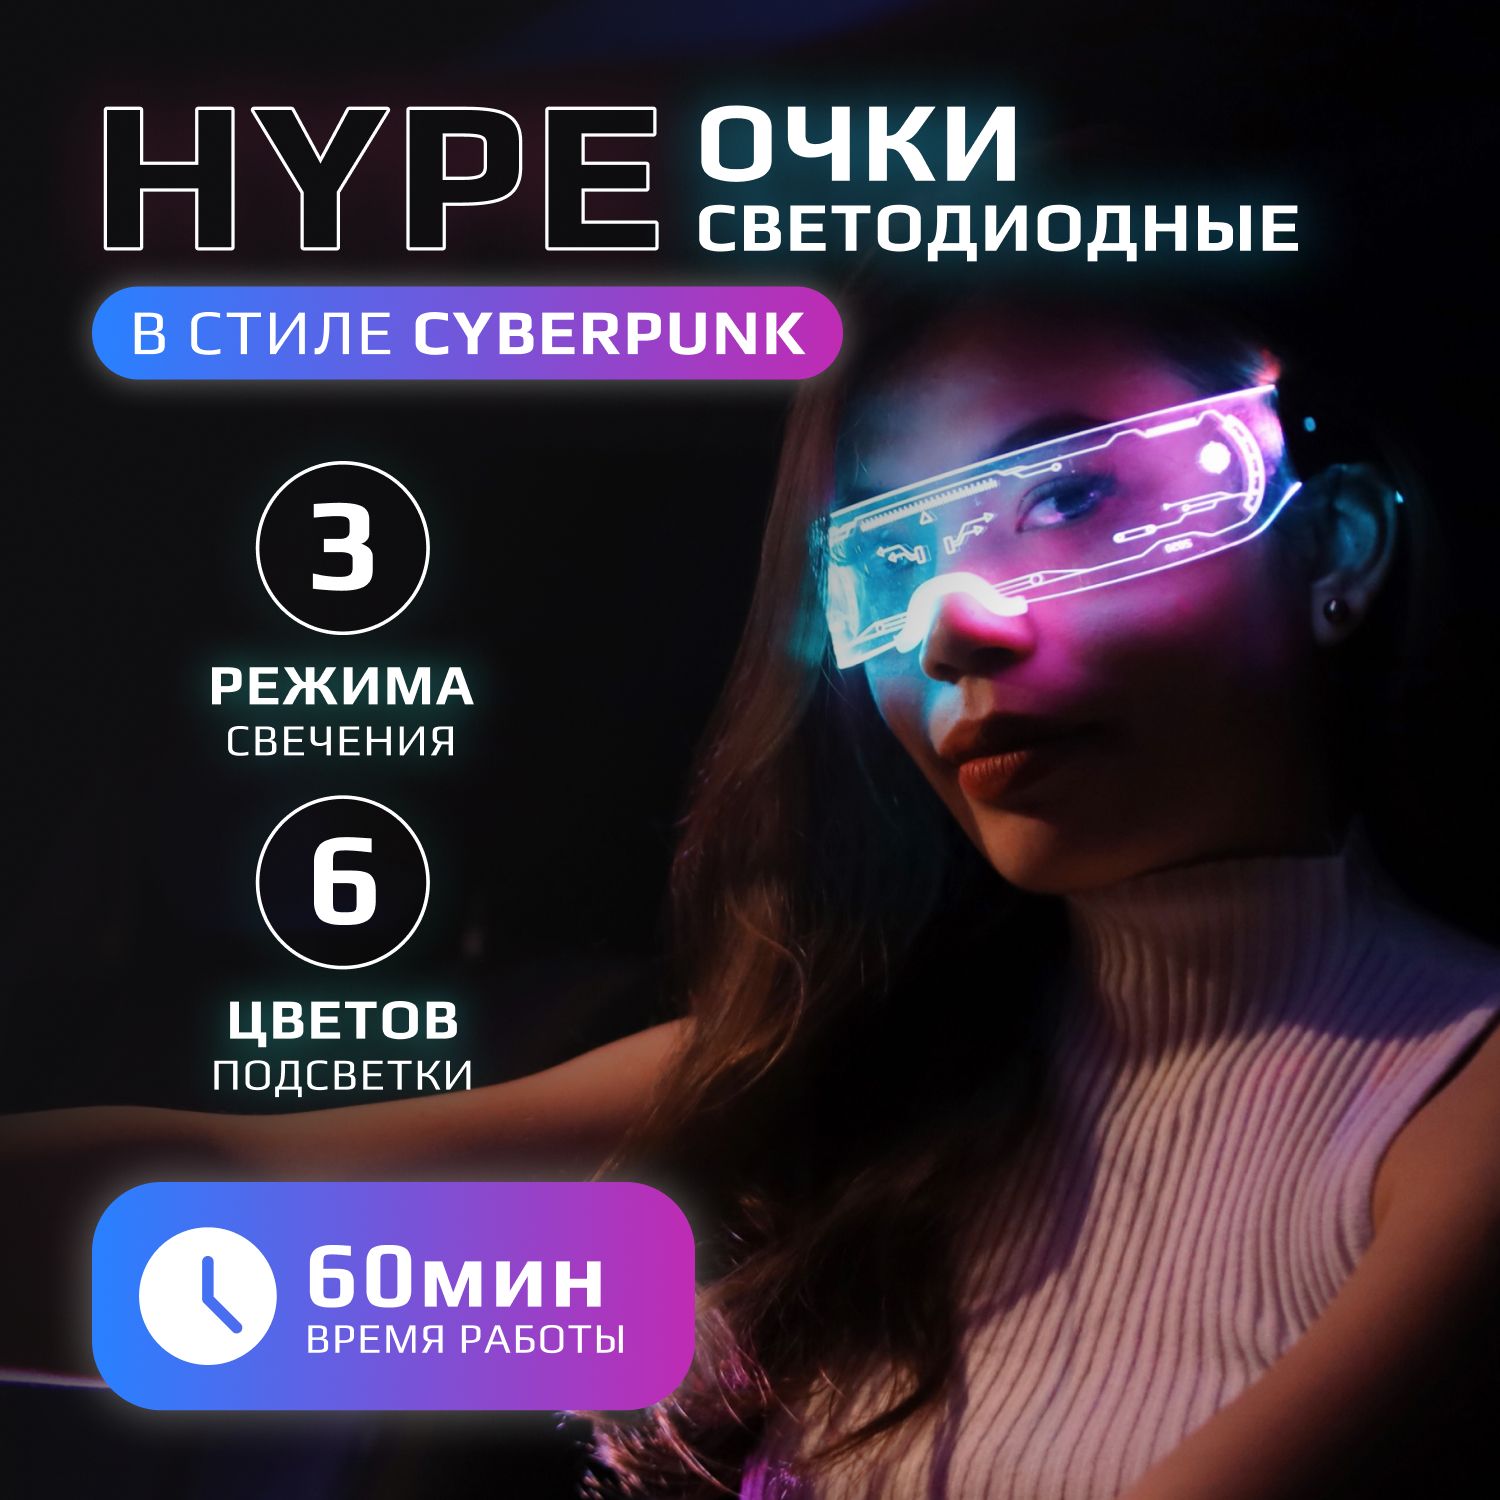 Cyberpunk очки характеристик фото 71